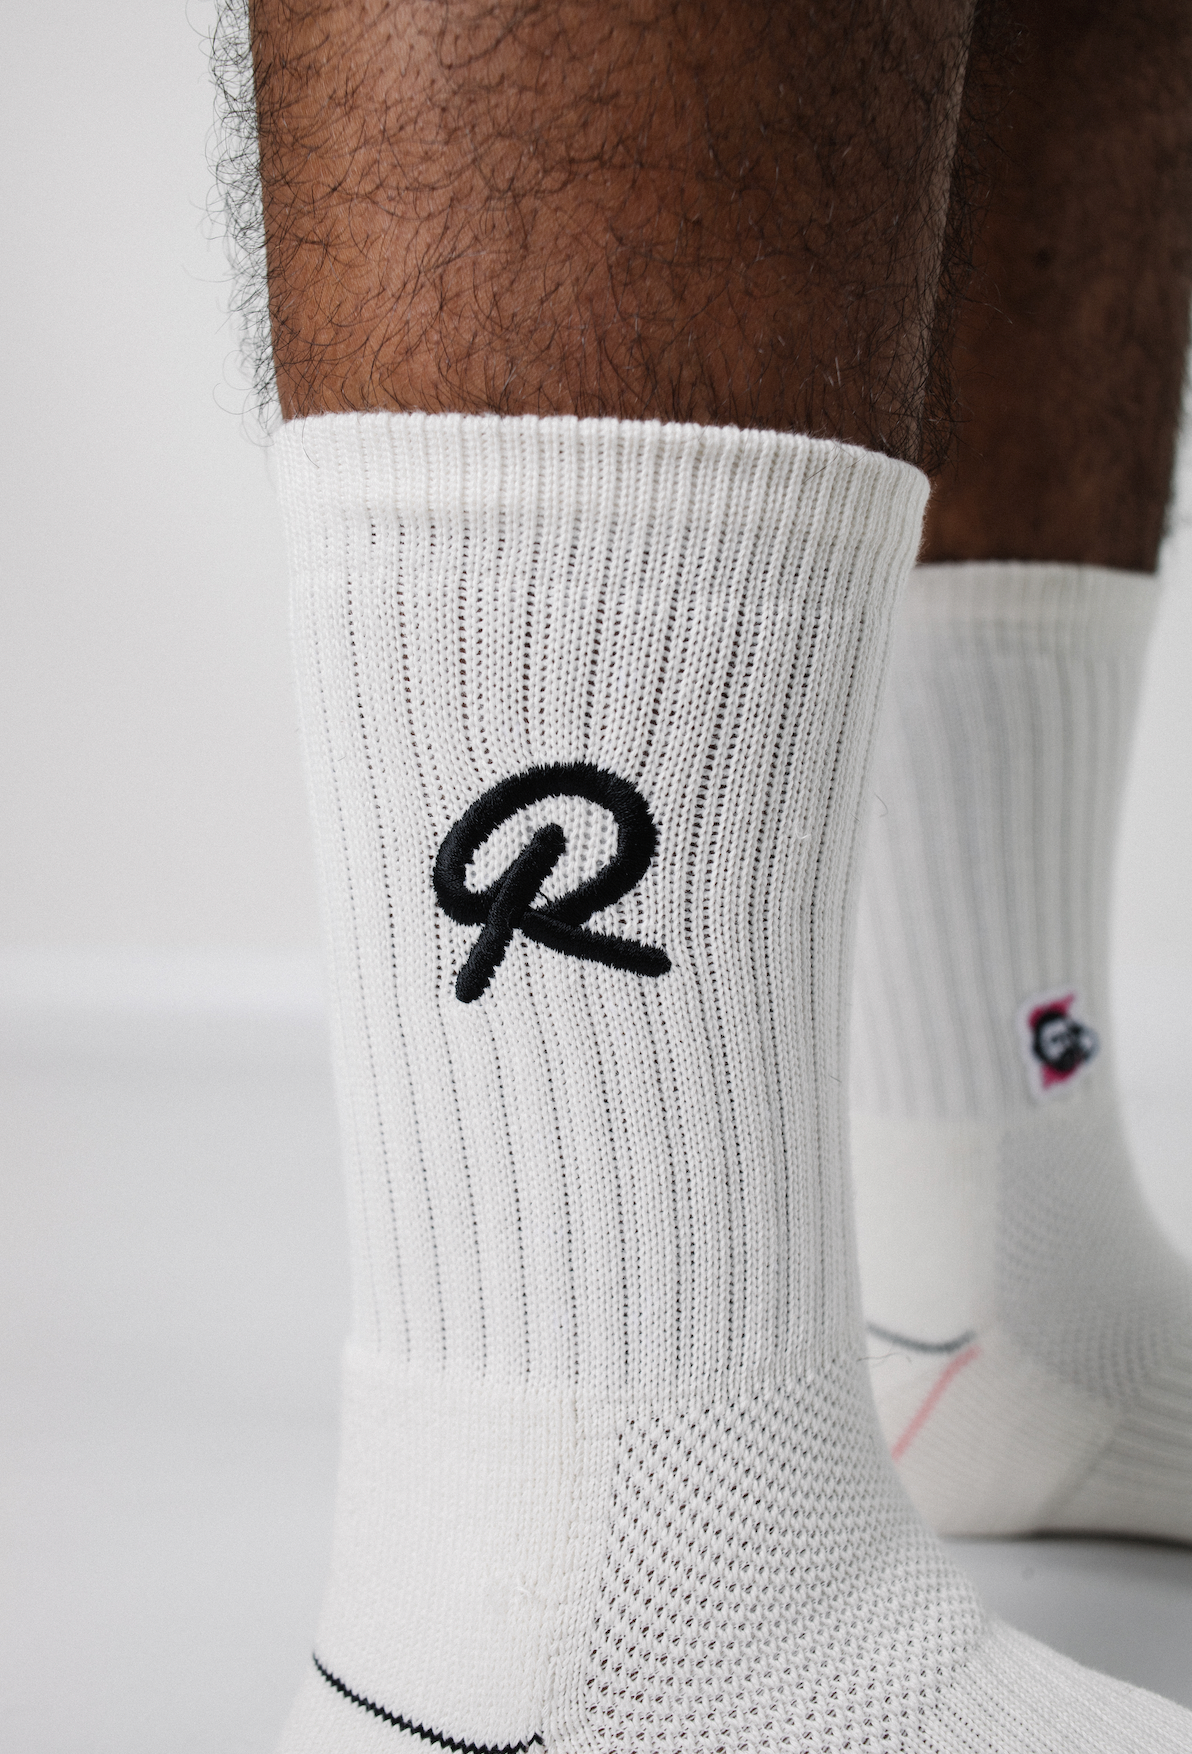 R1 basketball socks